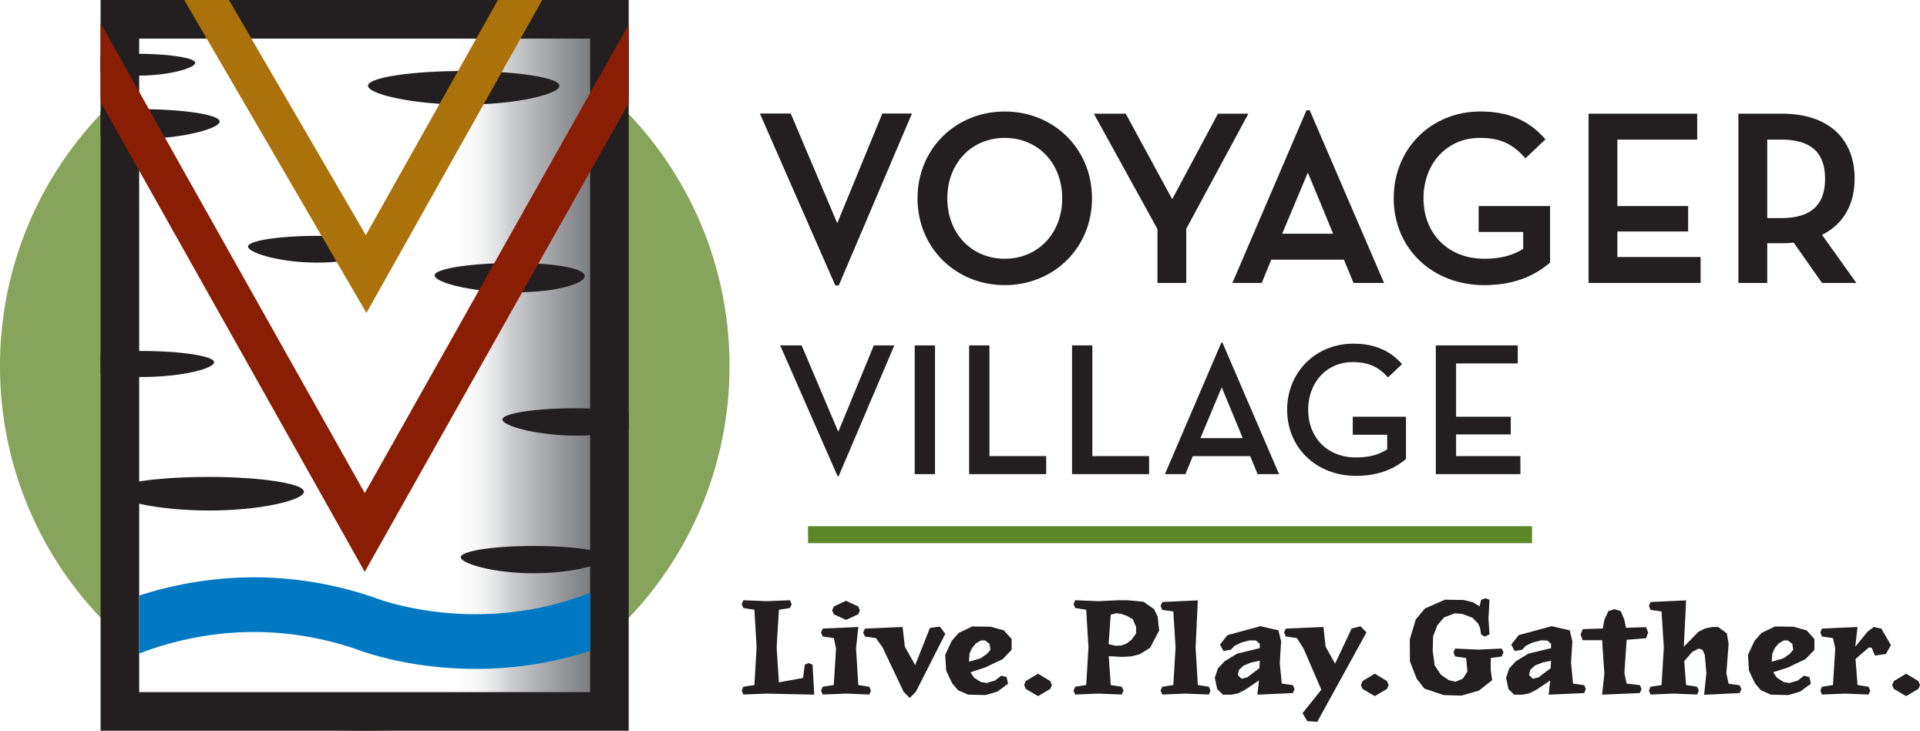 https://spoonerchamber.org/wp-content/uploads/2024/05/voyager-village-logo.png